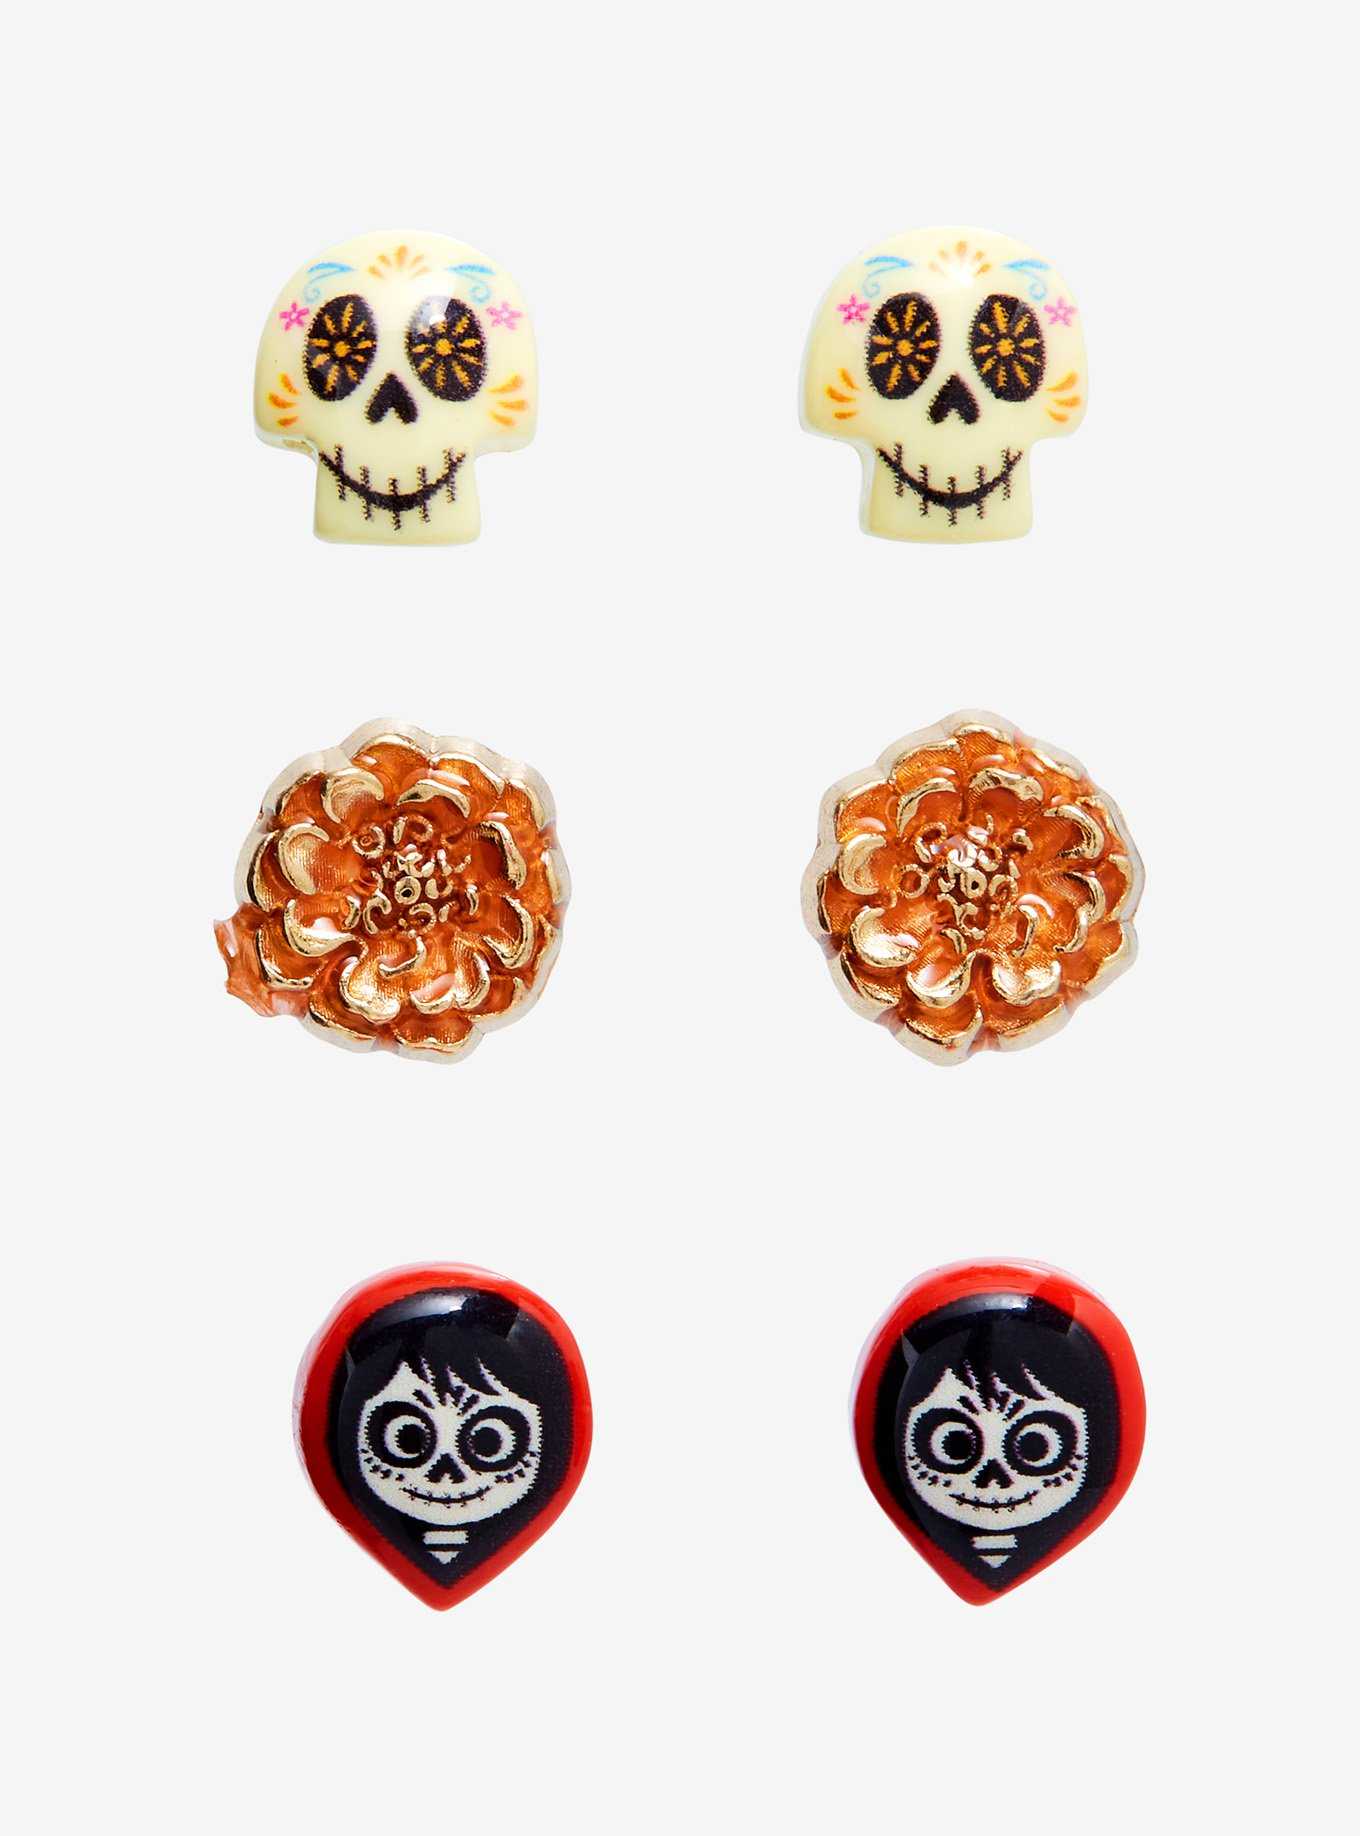 Disney Pixar Coco Icons Earring Set, , hi-res